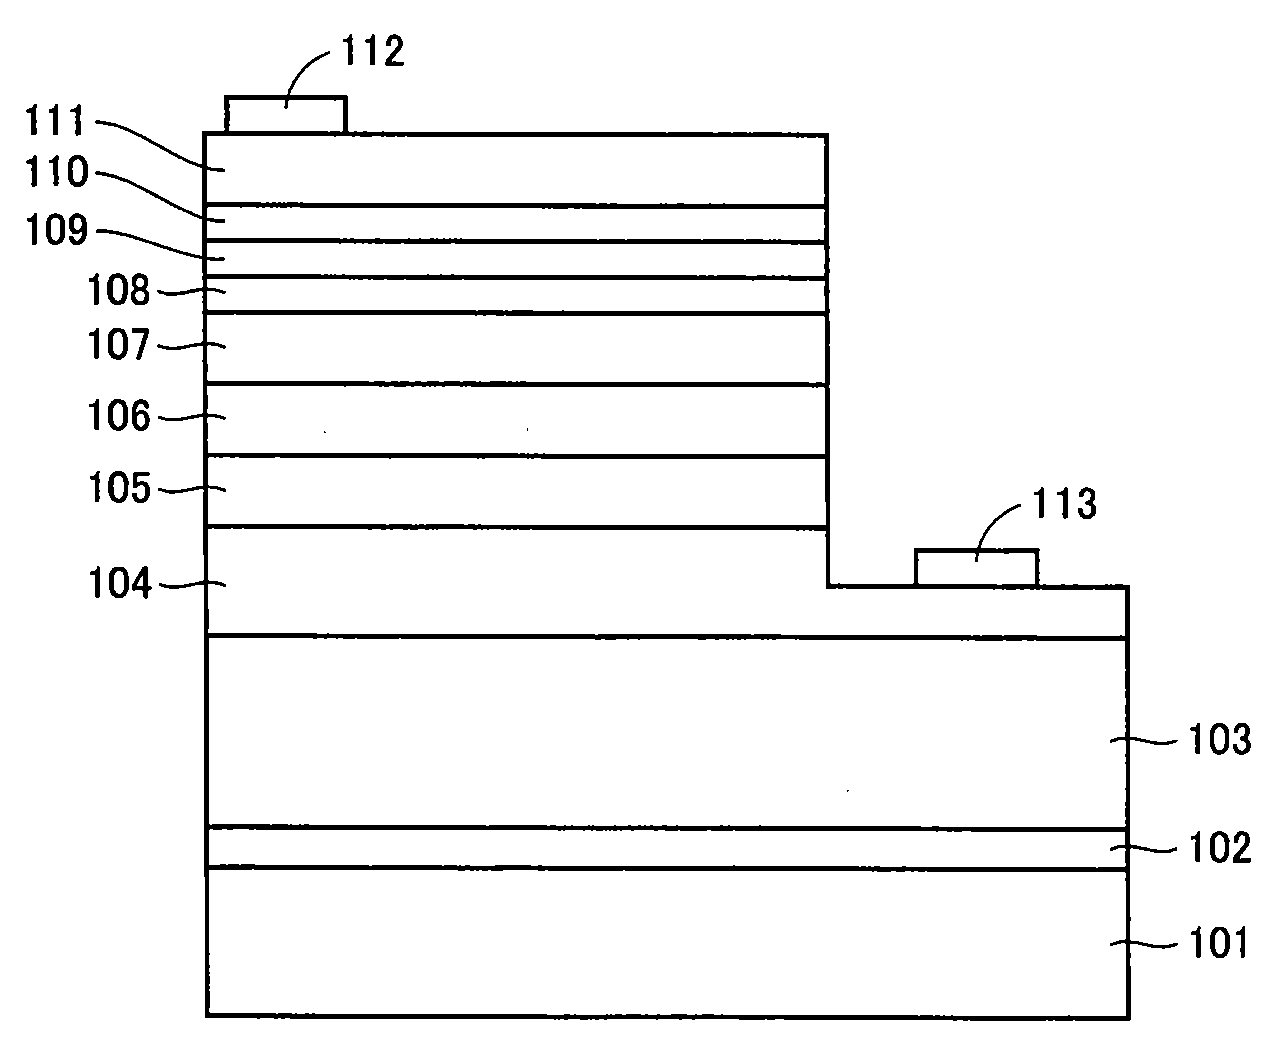 Method of fabricating a nitride semiconductor light emitting device